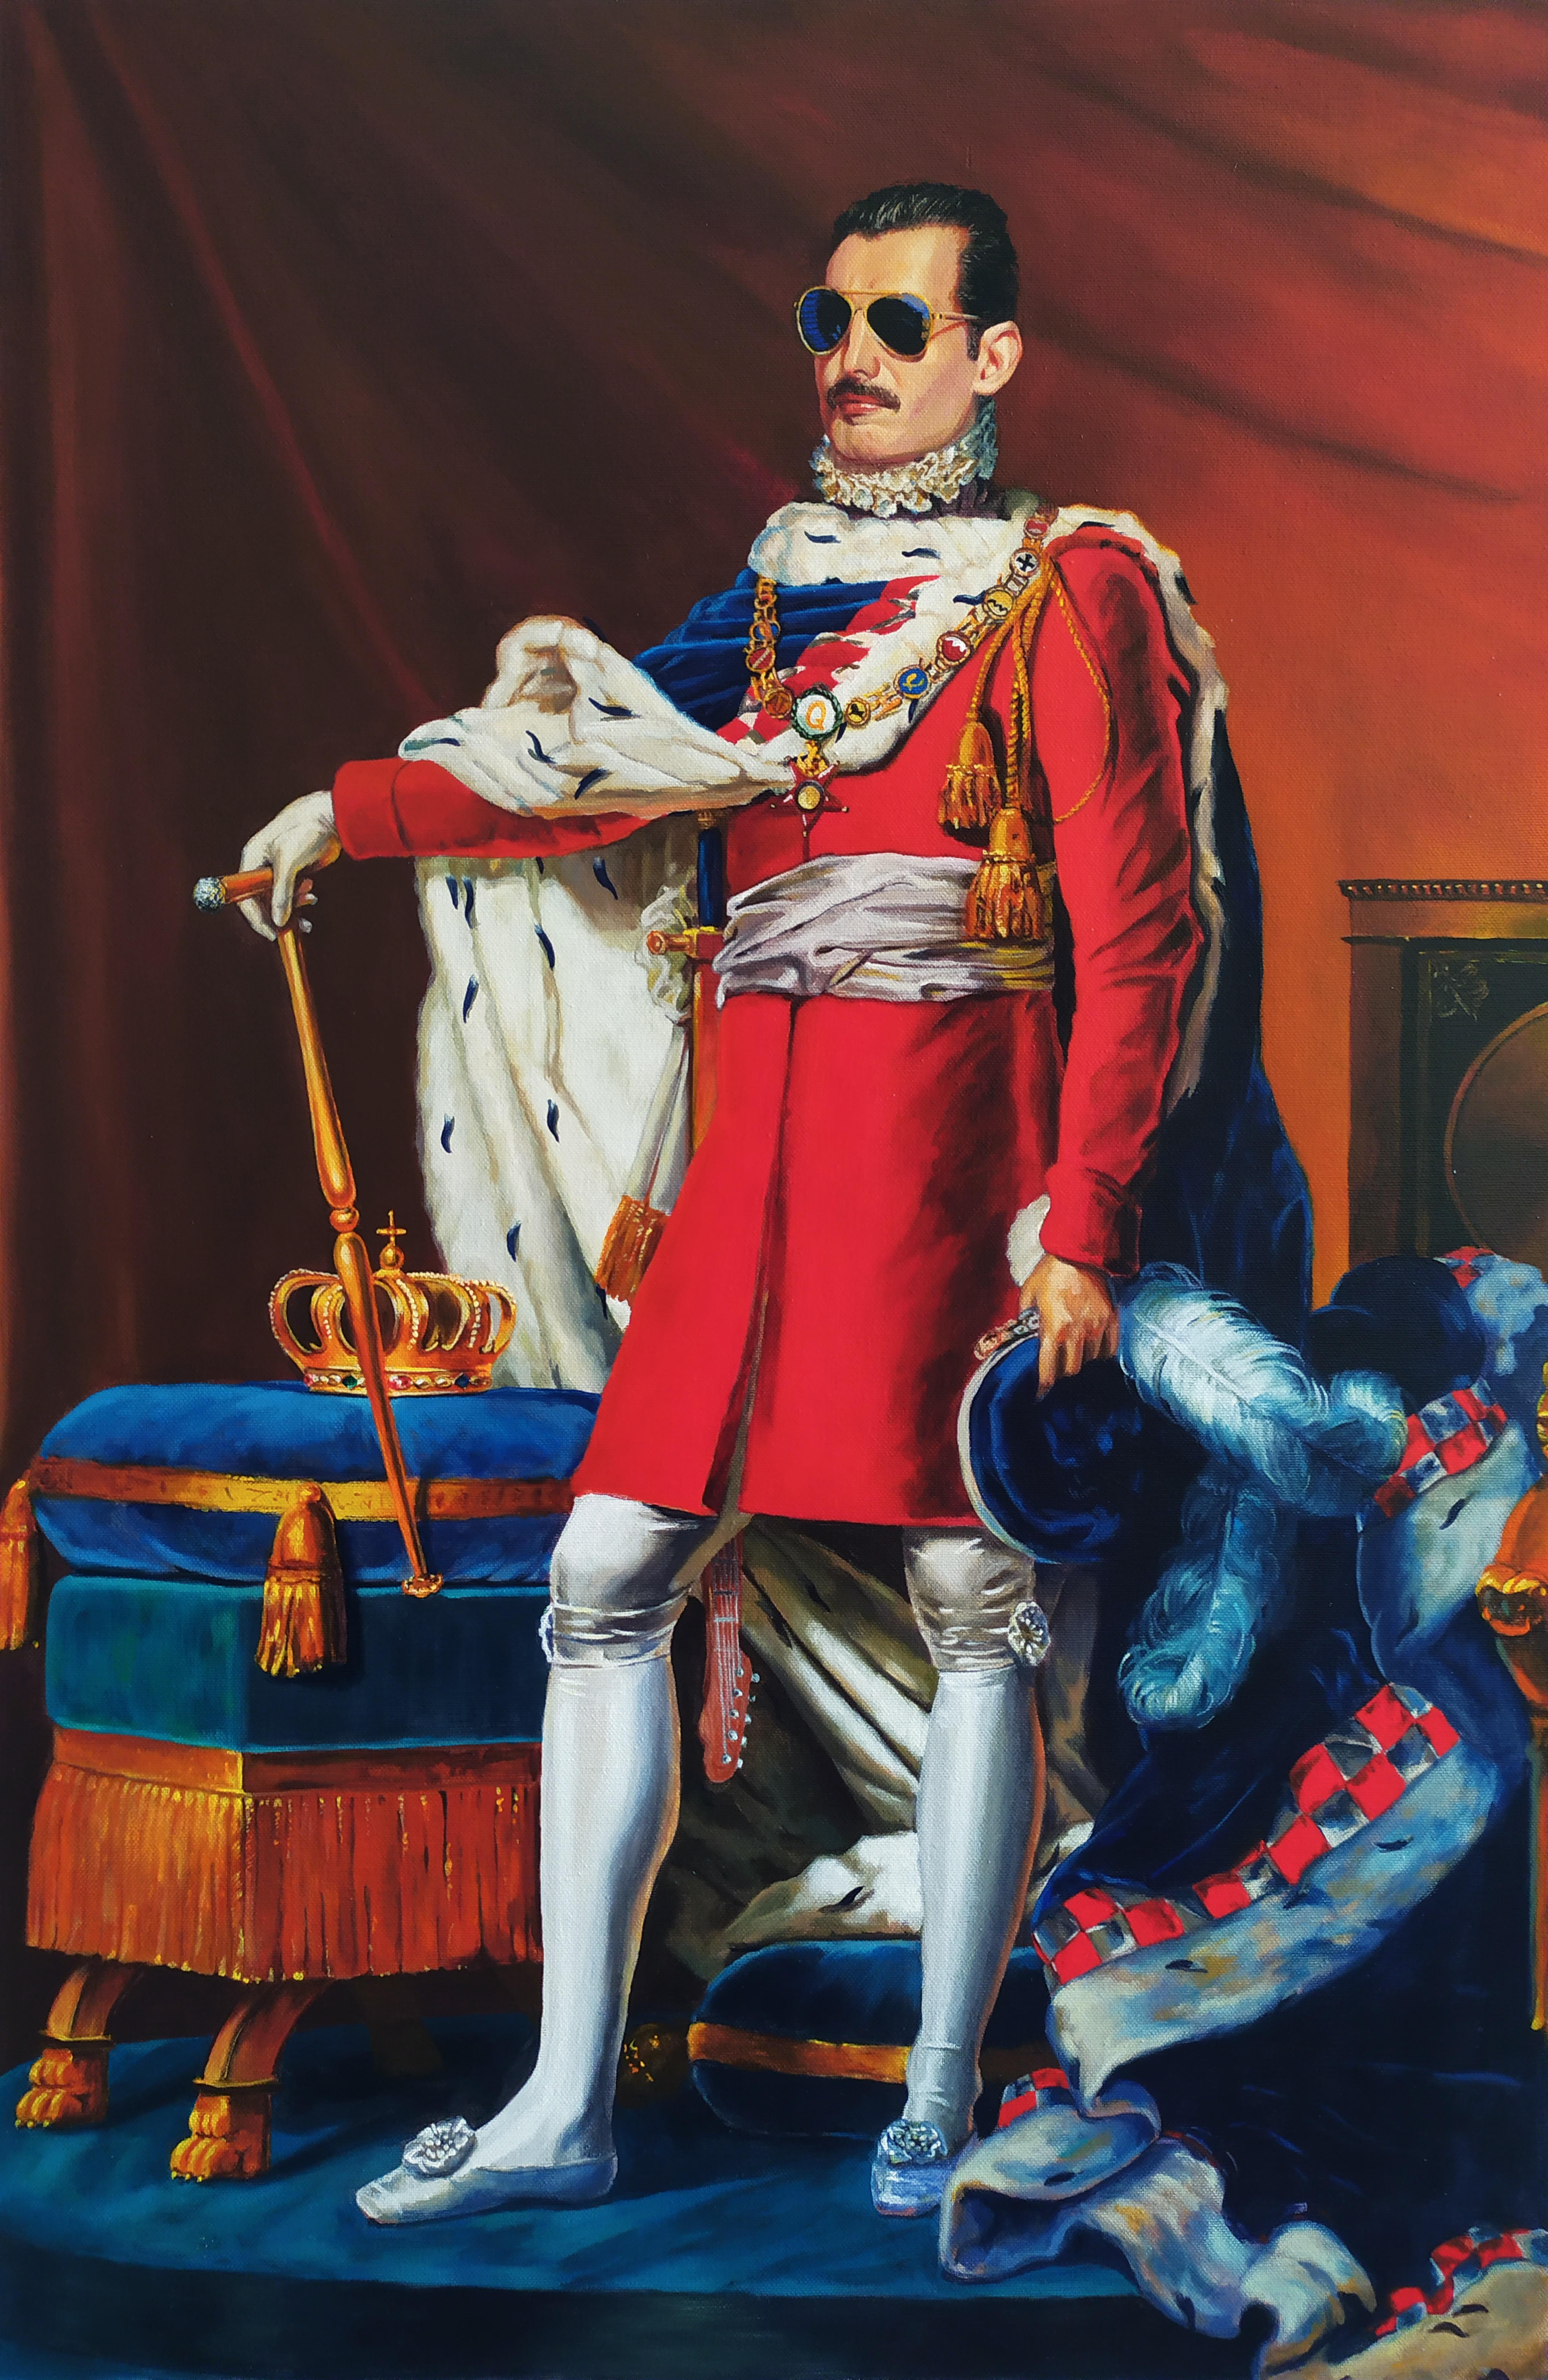 Freddie Mercury -Portrait Painting Colors Red Blue Brown White Orange Yellow 